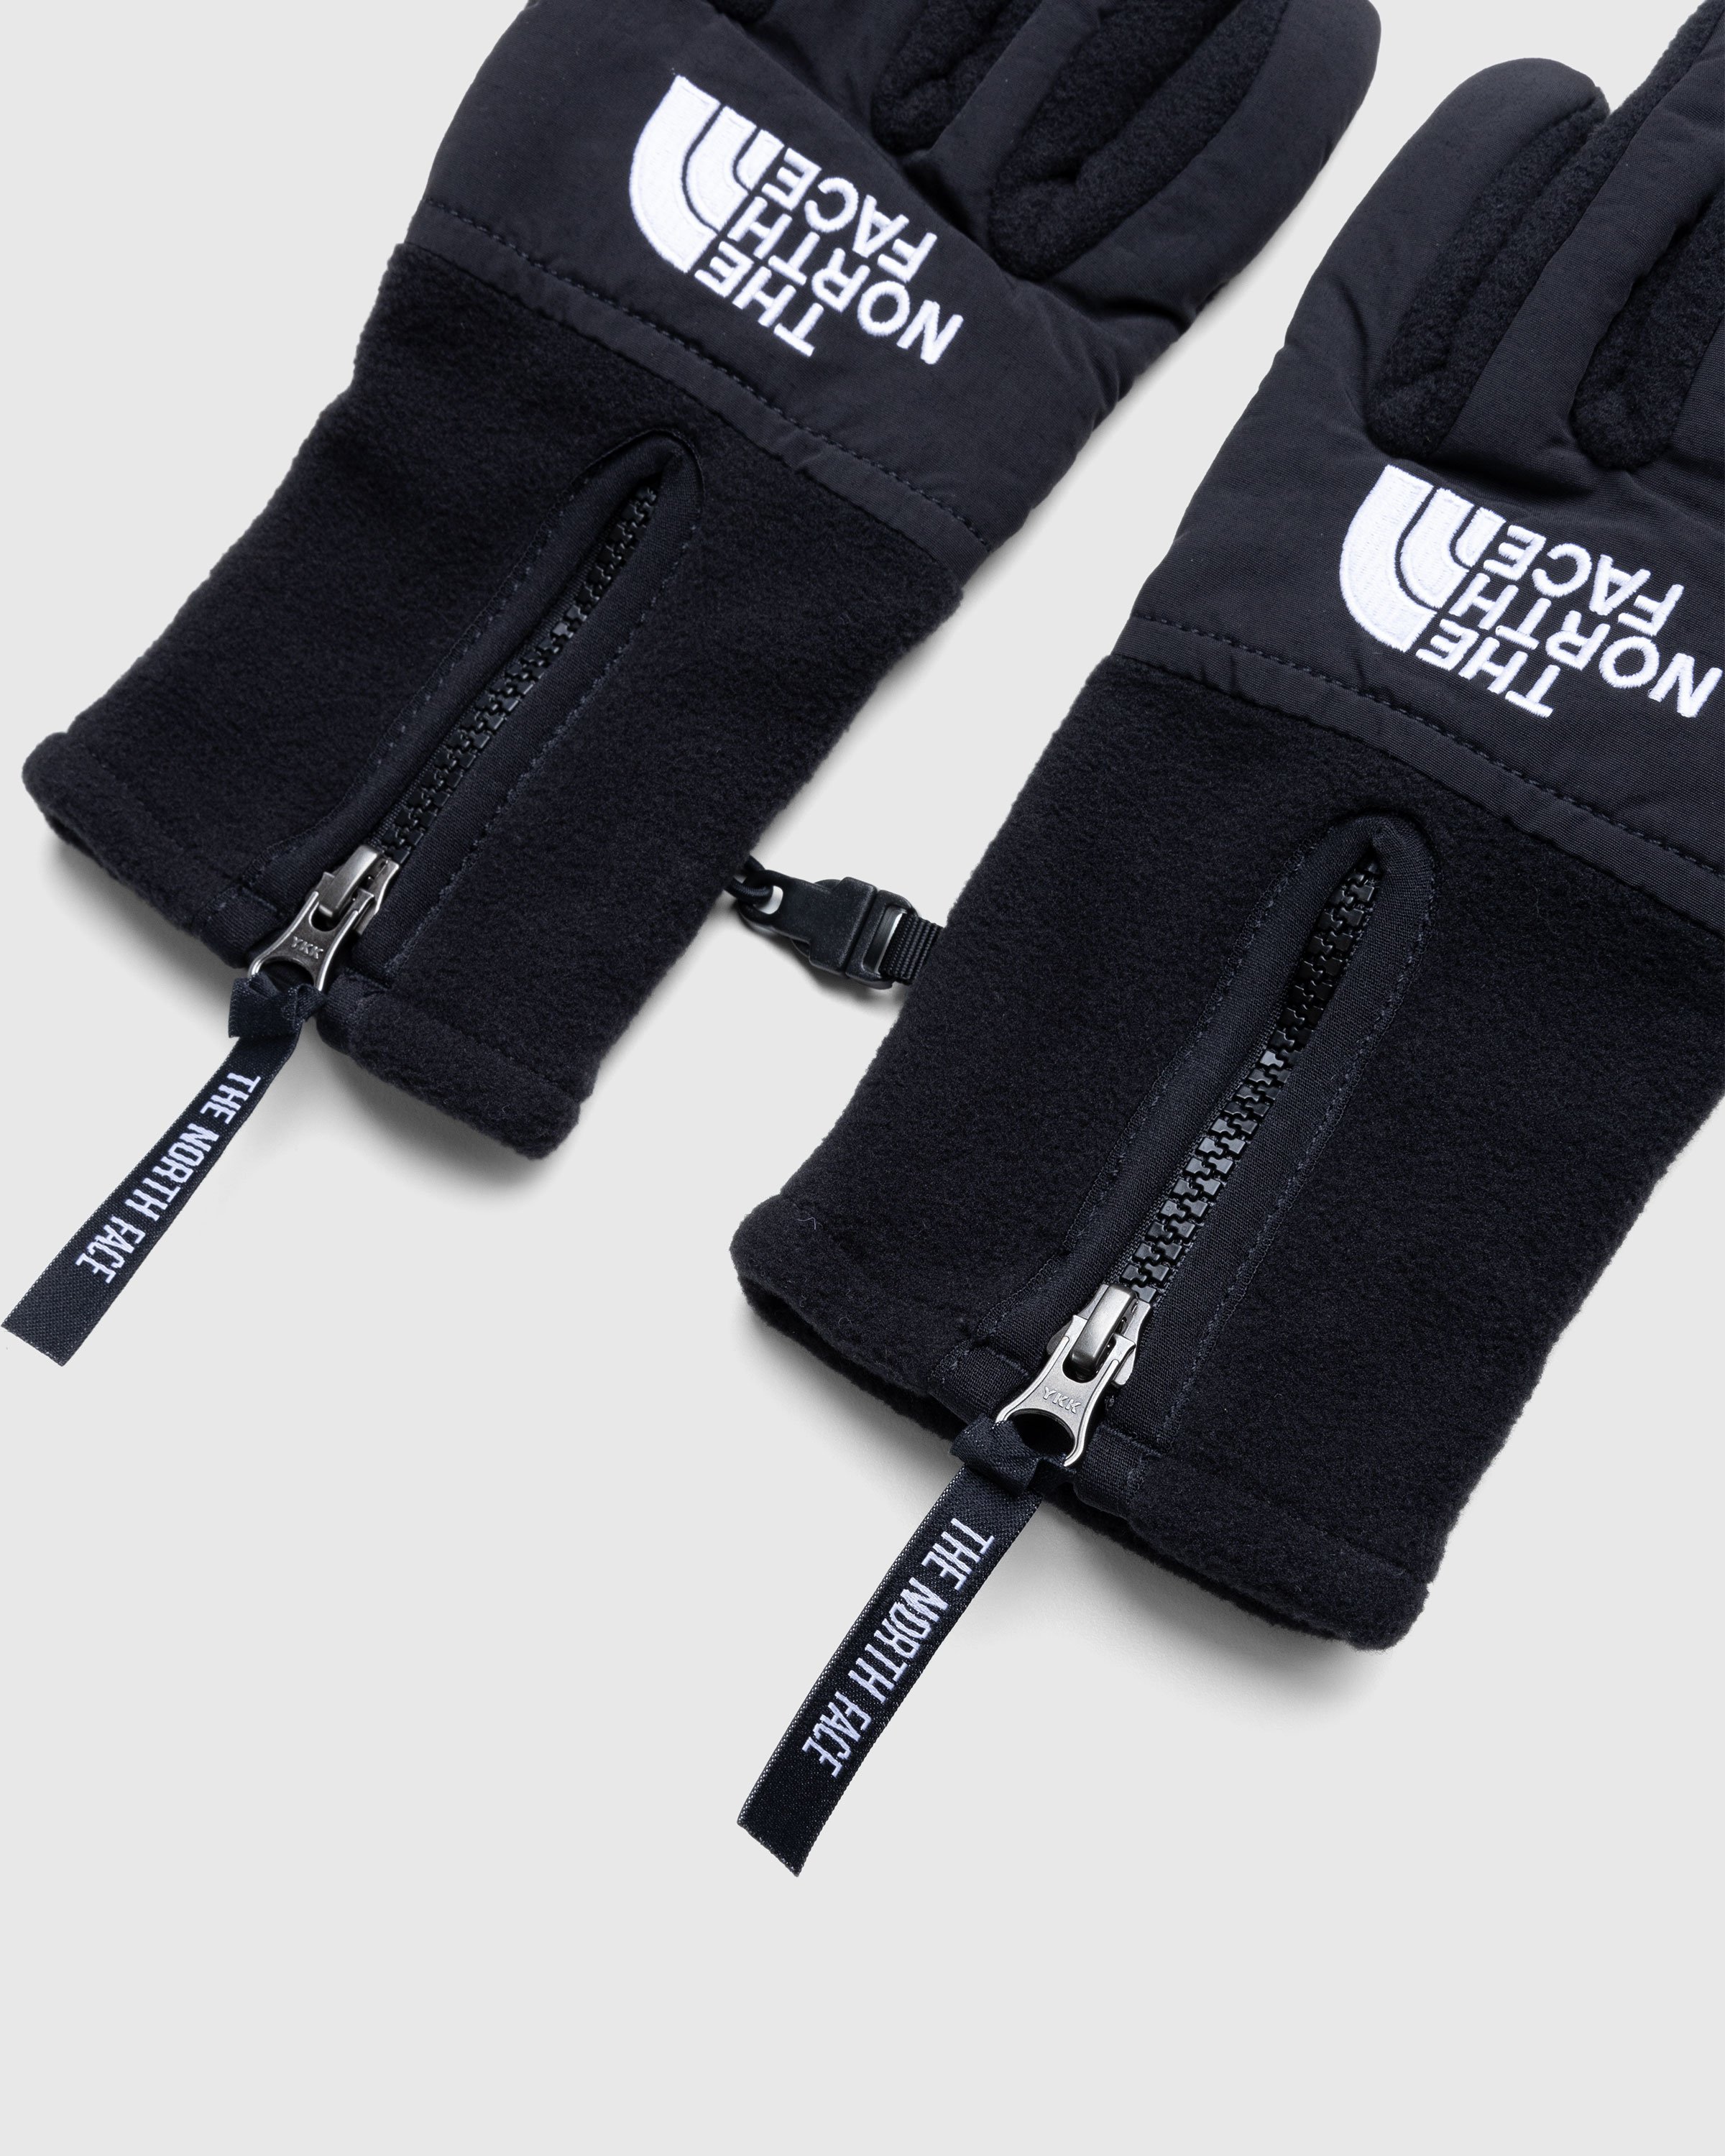 The North Face - Denali Etip Gloves TNF Black - Accessories - Black - Image 3